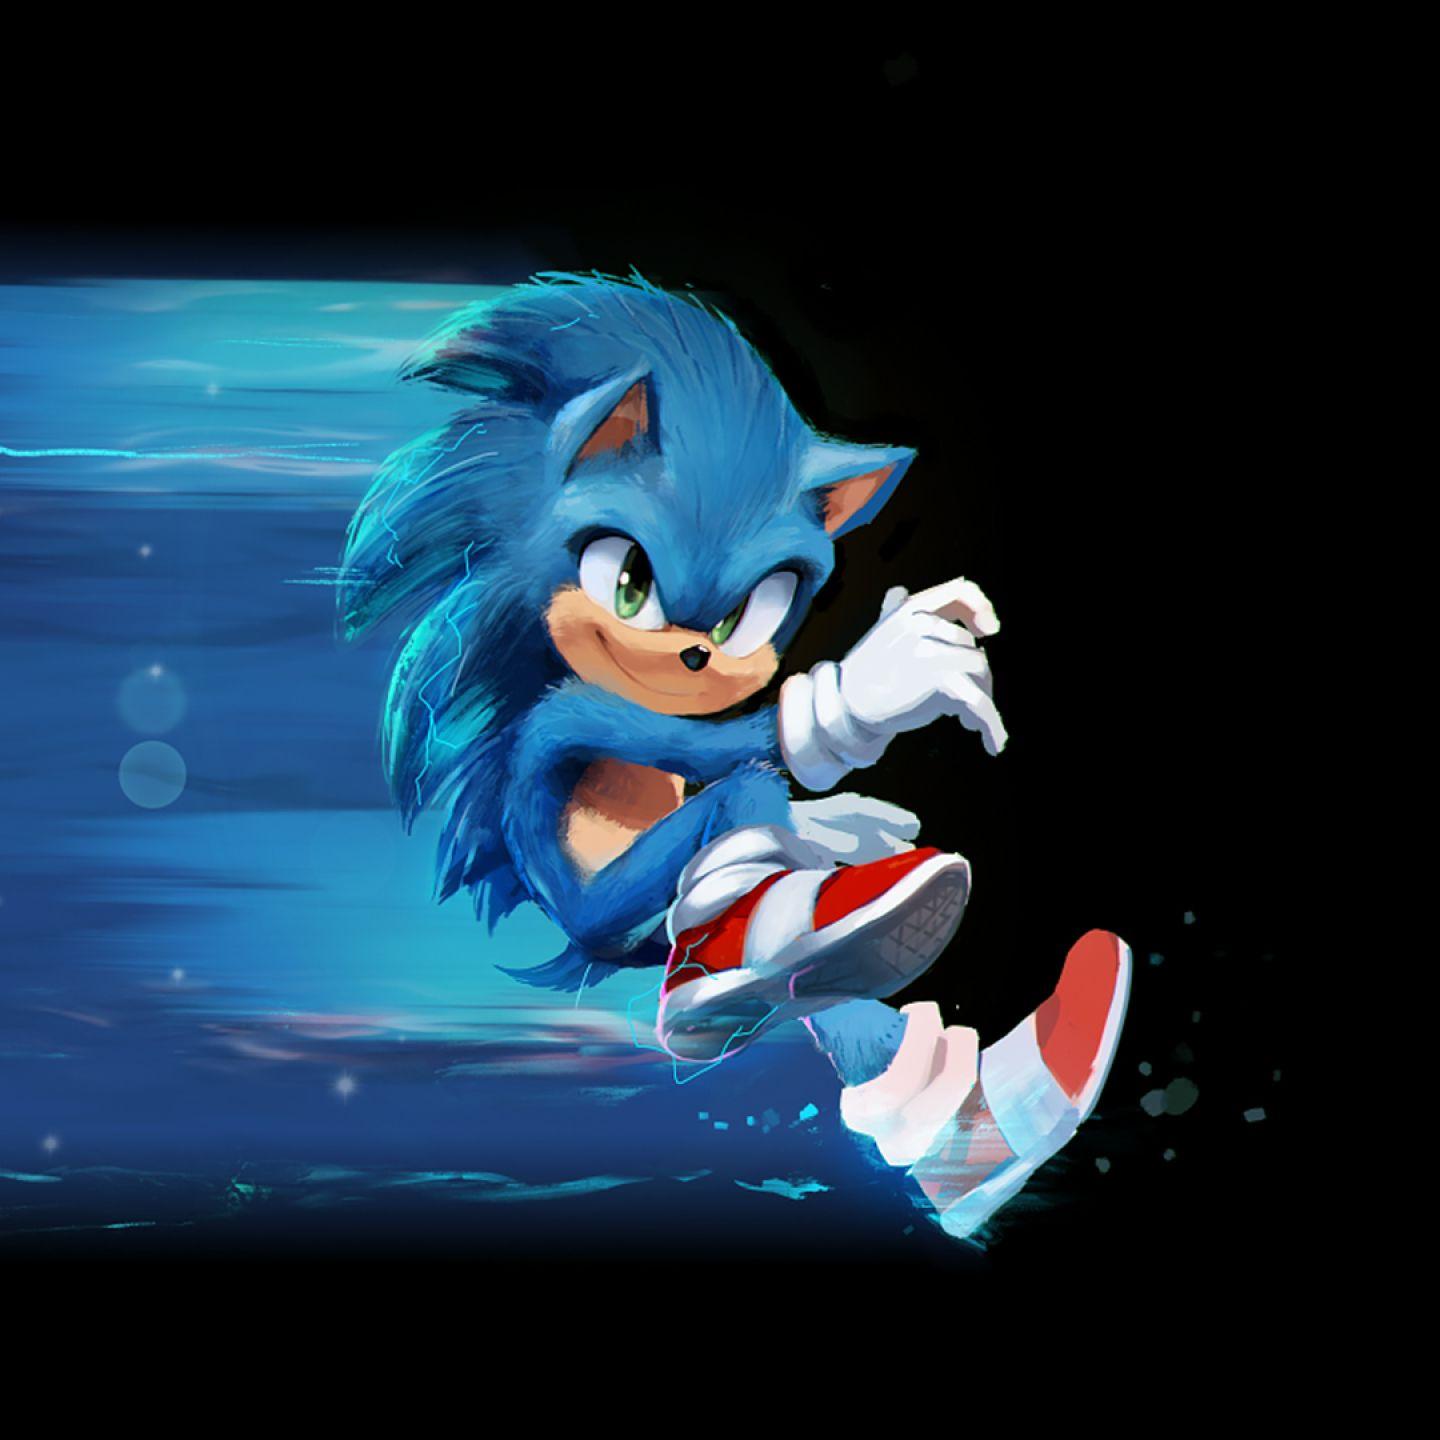 1440x1440 Sonic the Hedgehog Artwork 1440x1440 Nghị quyết